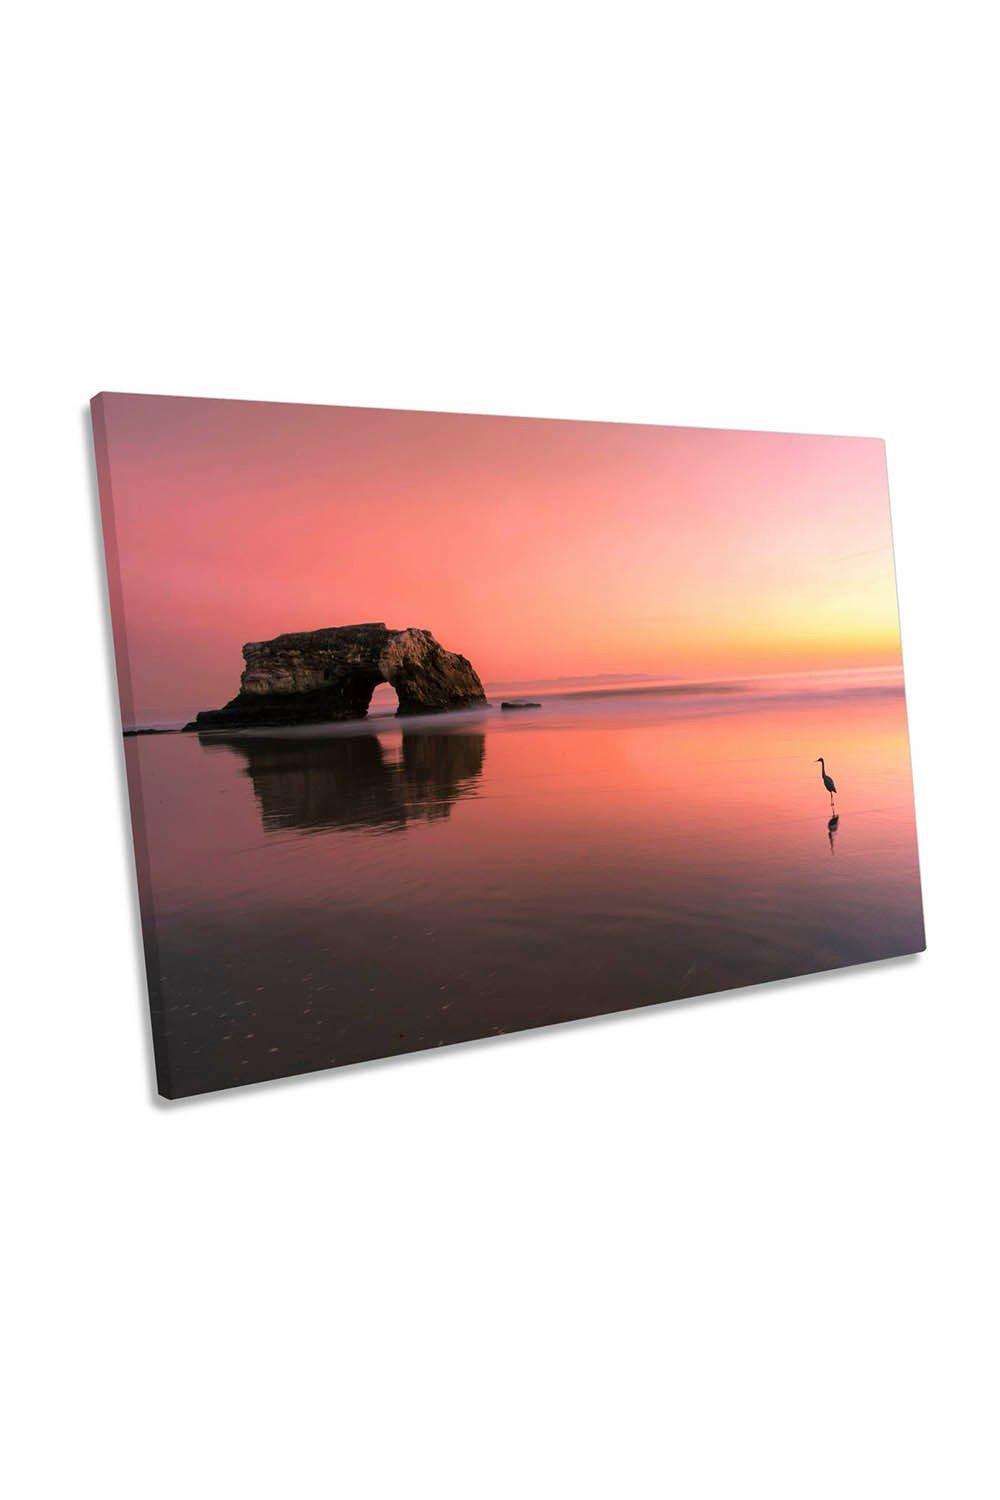 Sunset at the Beach Bird Coastal Pink Canvas Wall Art Picture Print